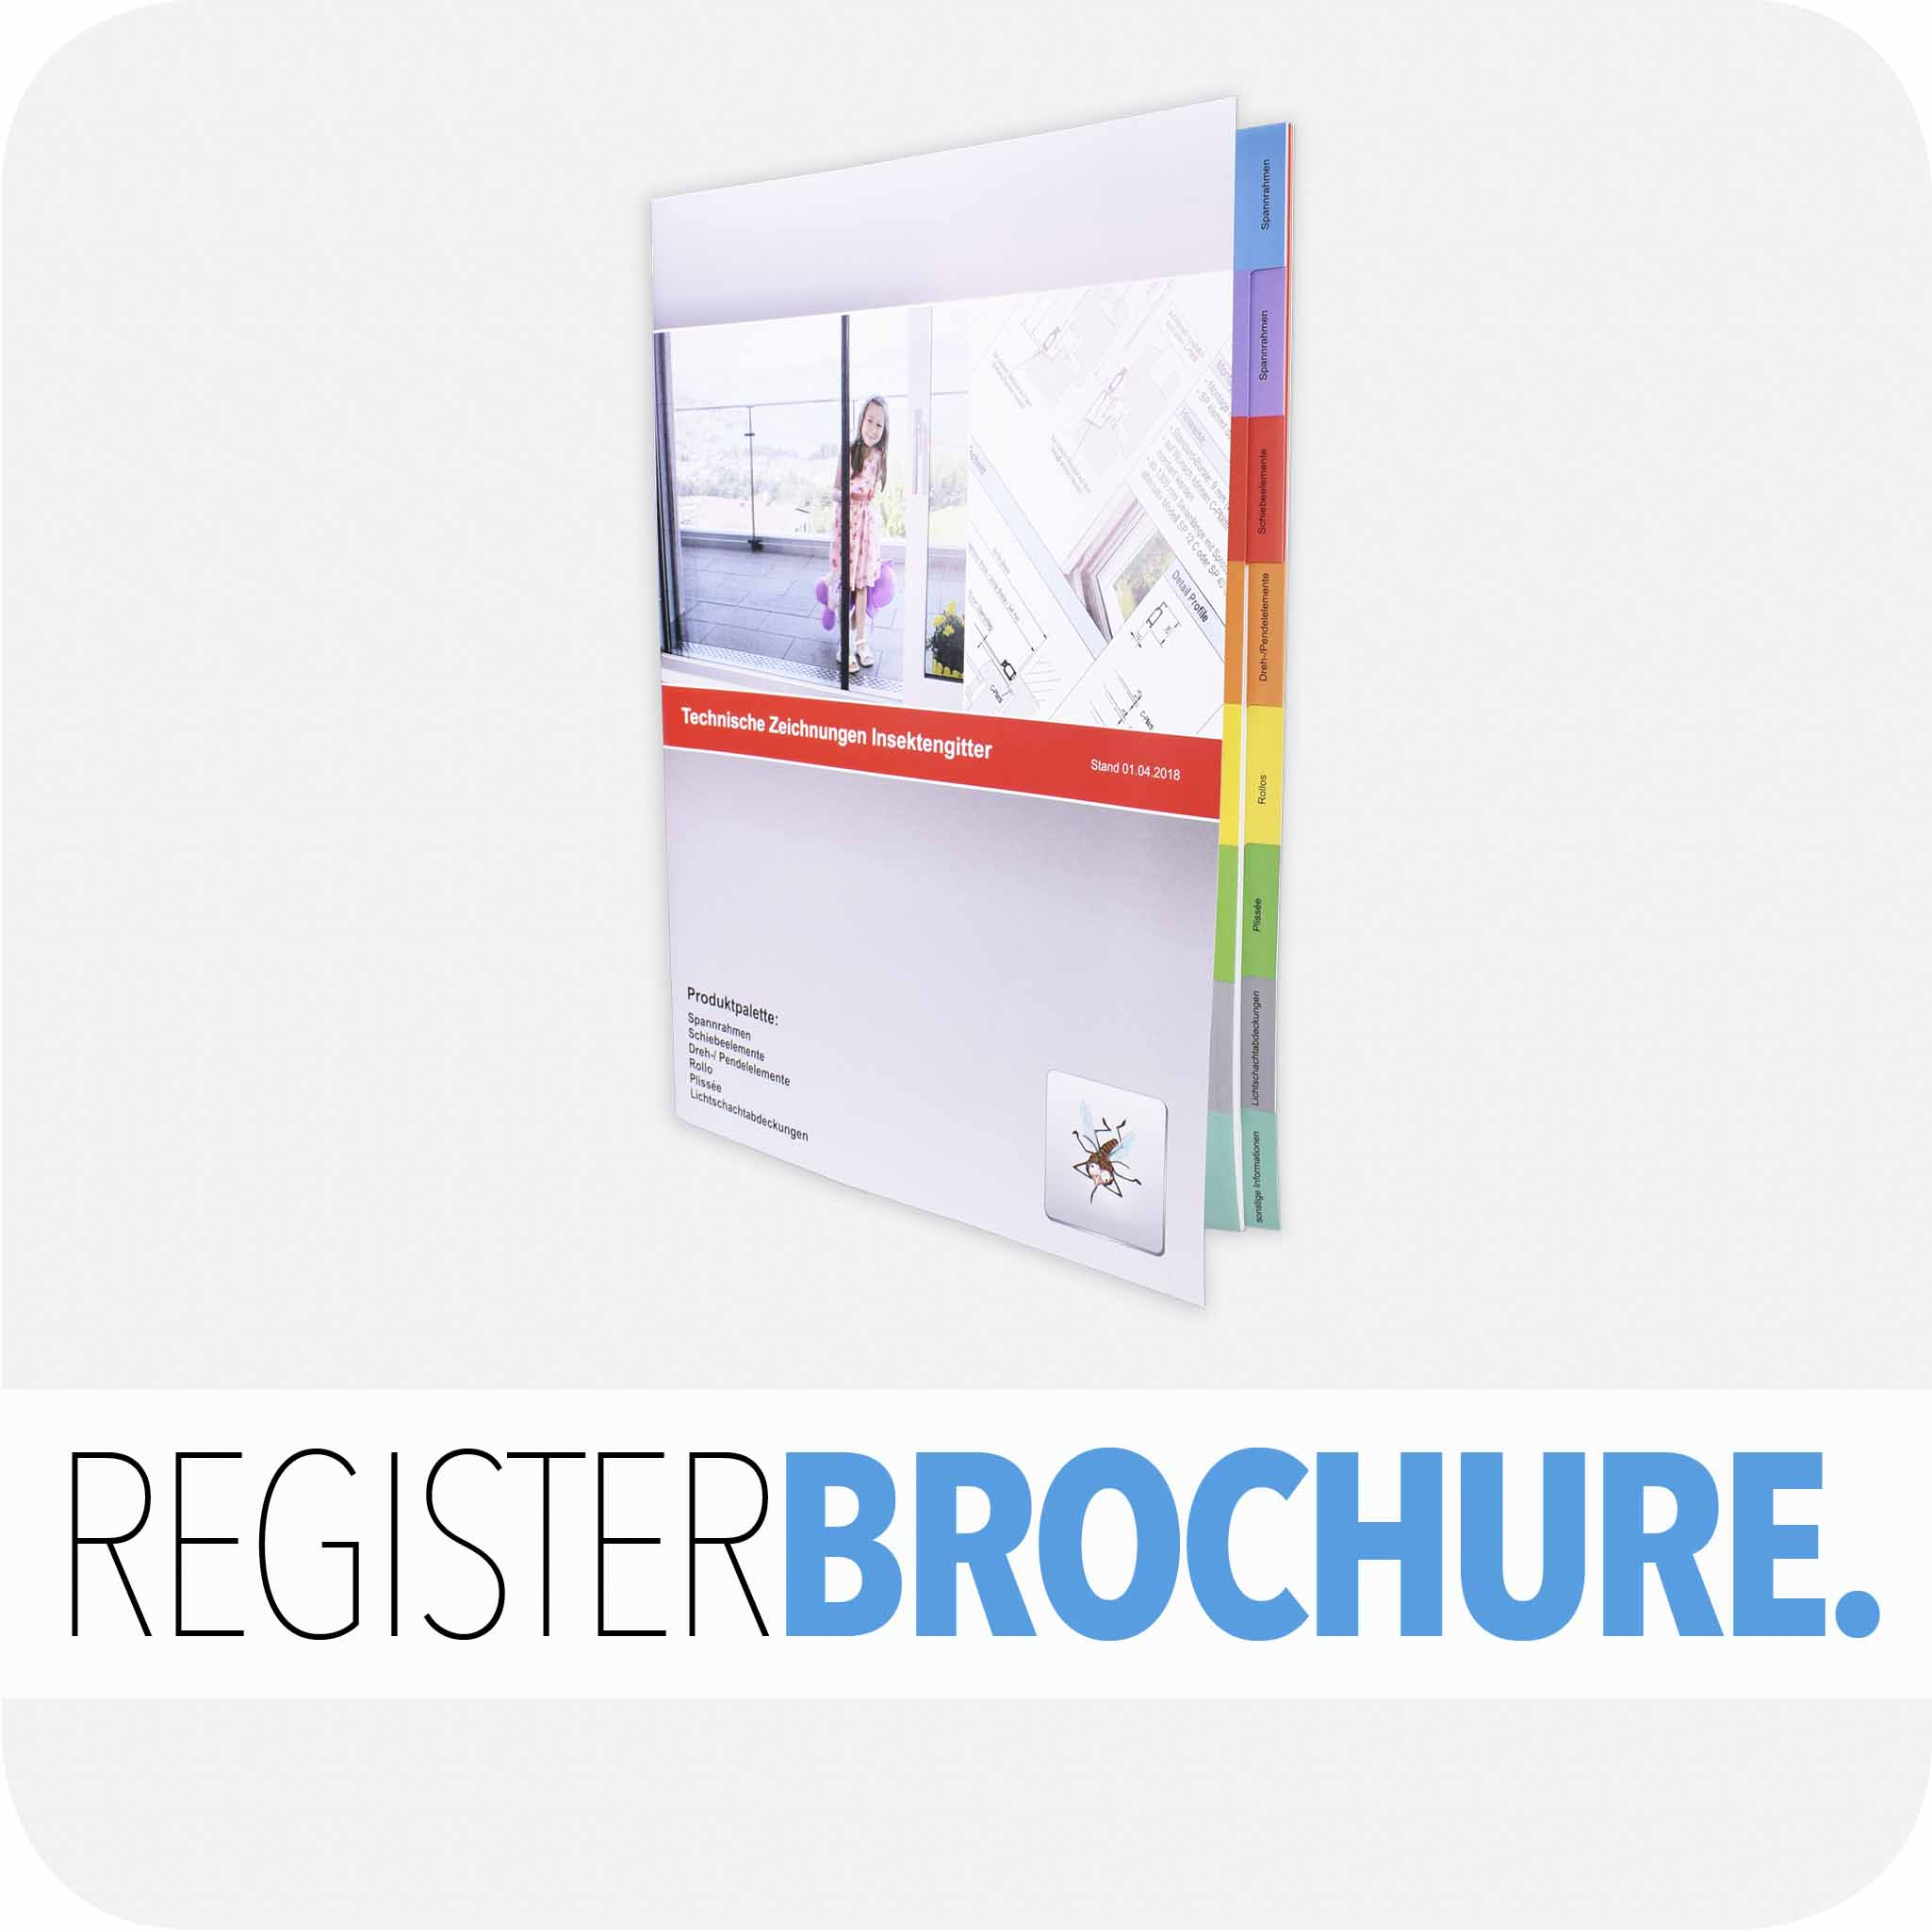 Register brochure